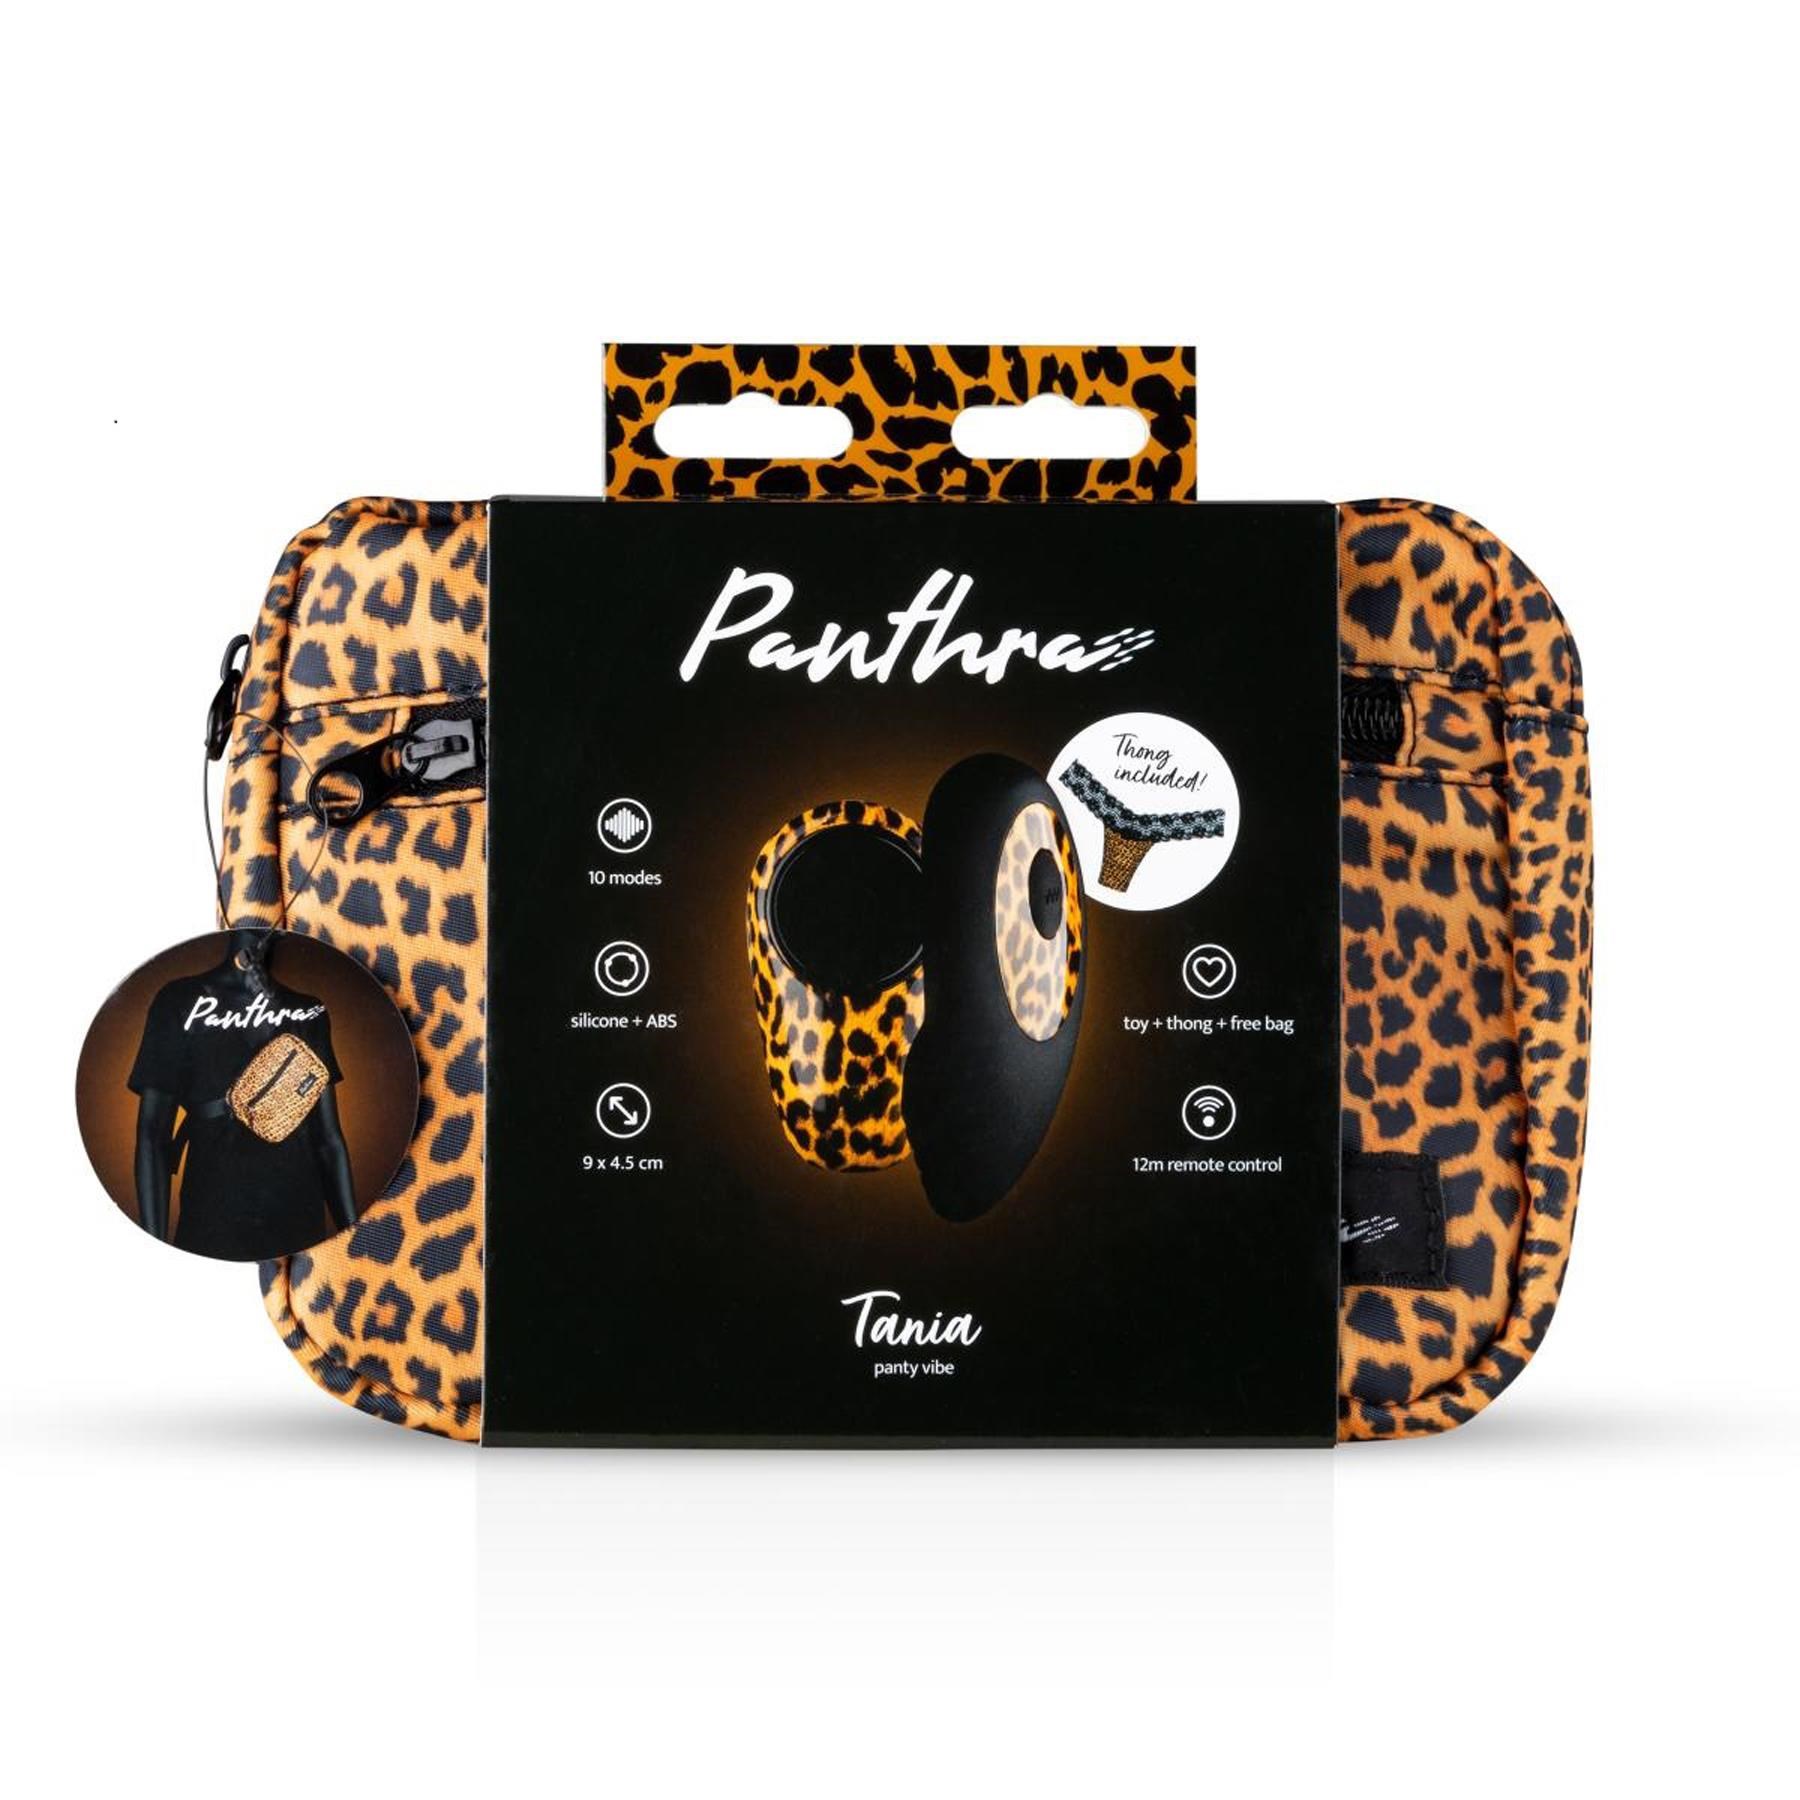 Panthra Tania Panty Vibrator - Packaging Shot